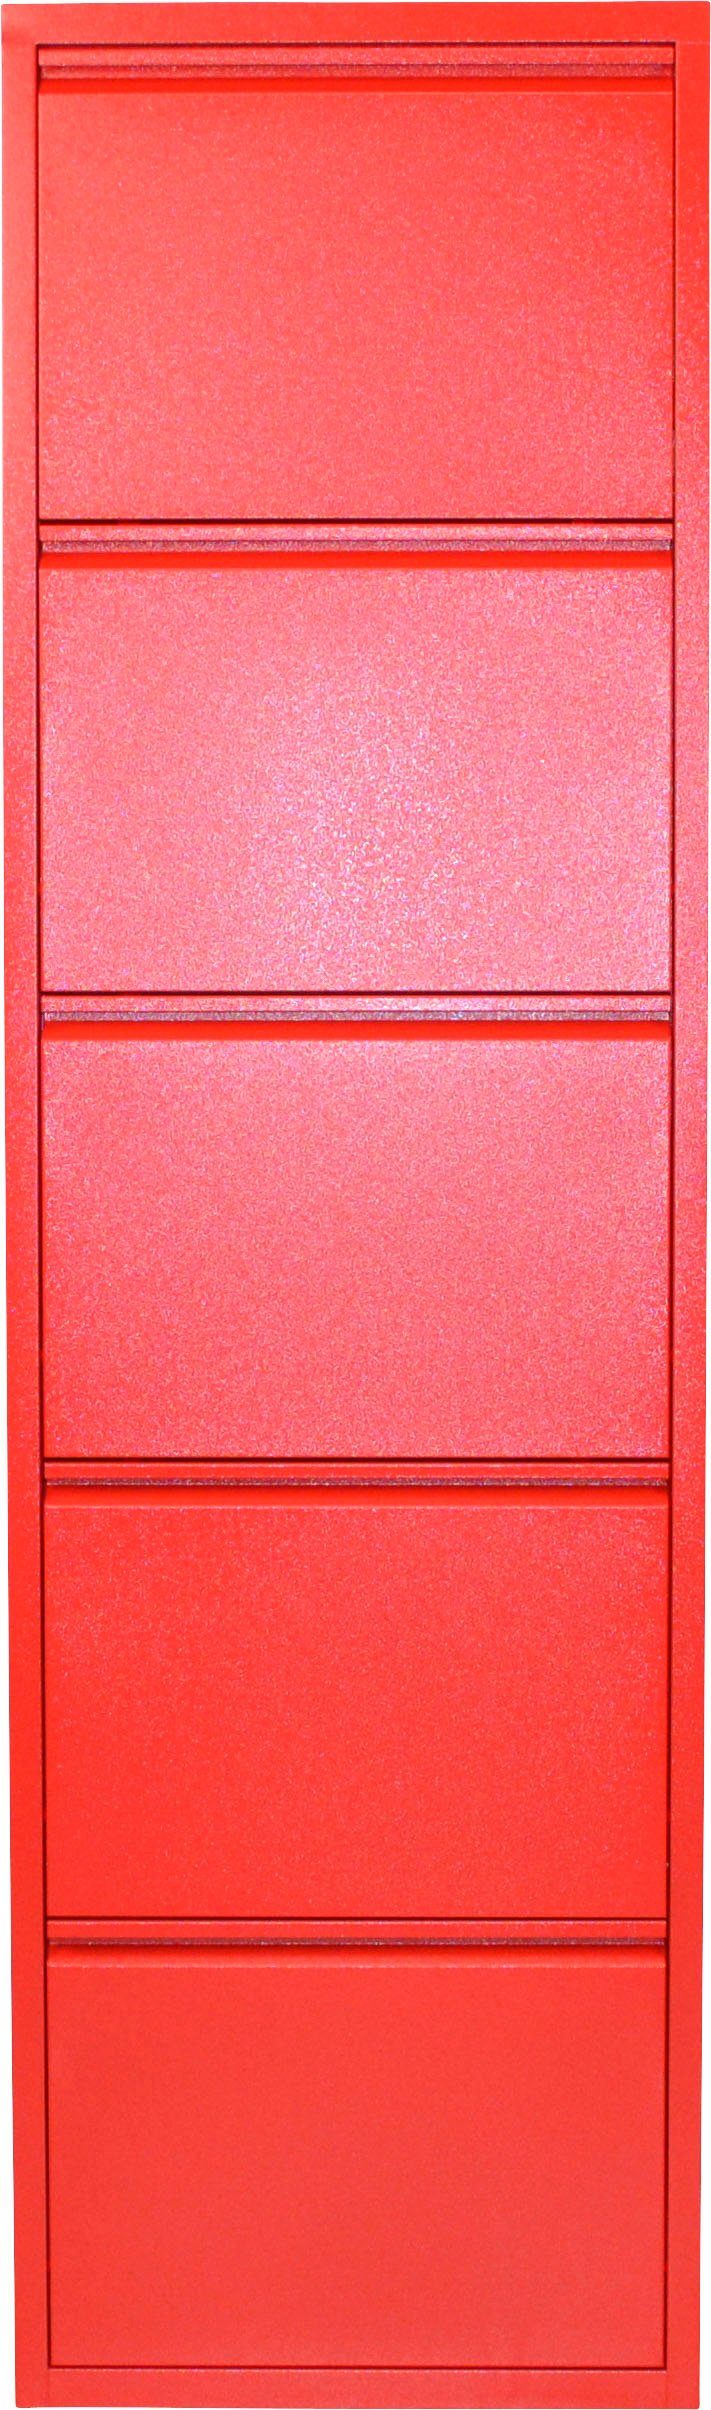 INOSIGN Schuhschrank Metall, cm Melika Schuhklappen, aus Höhe rot 172,5 rot 5 